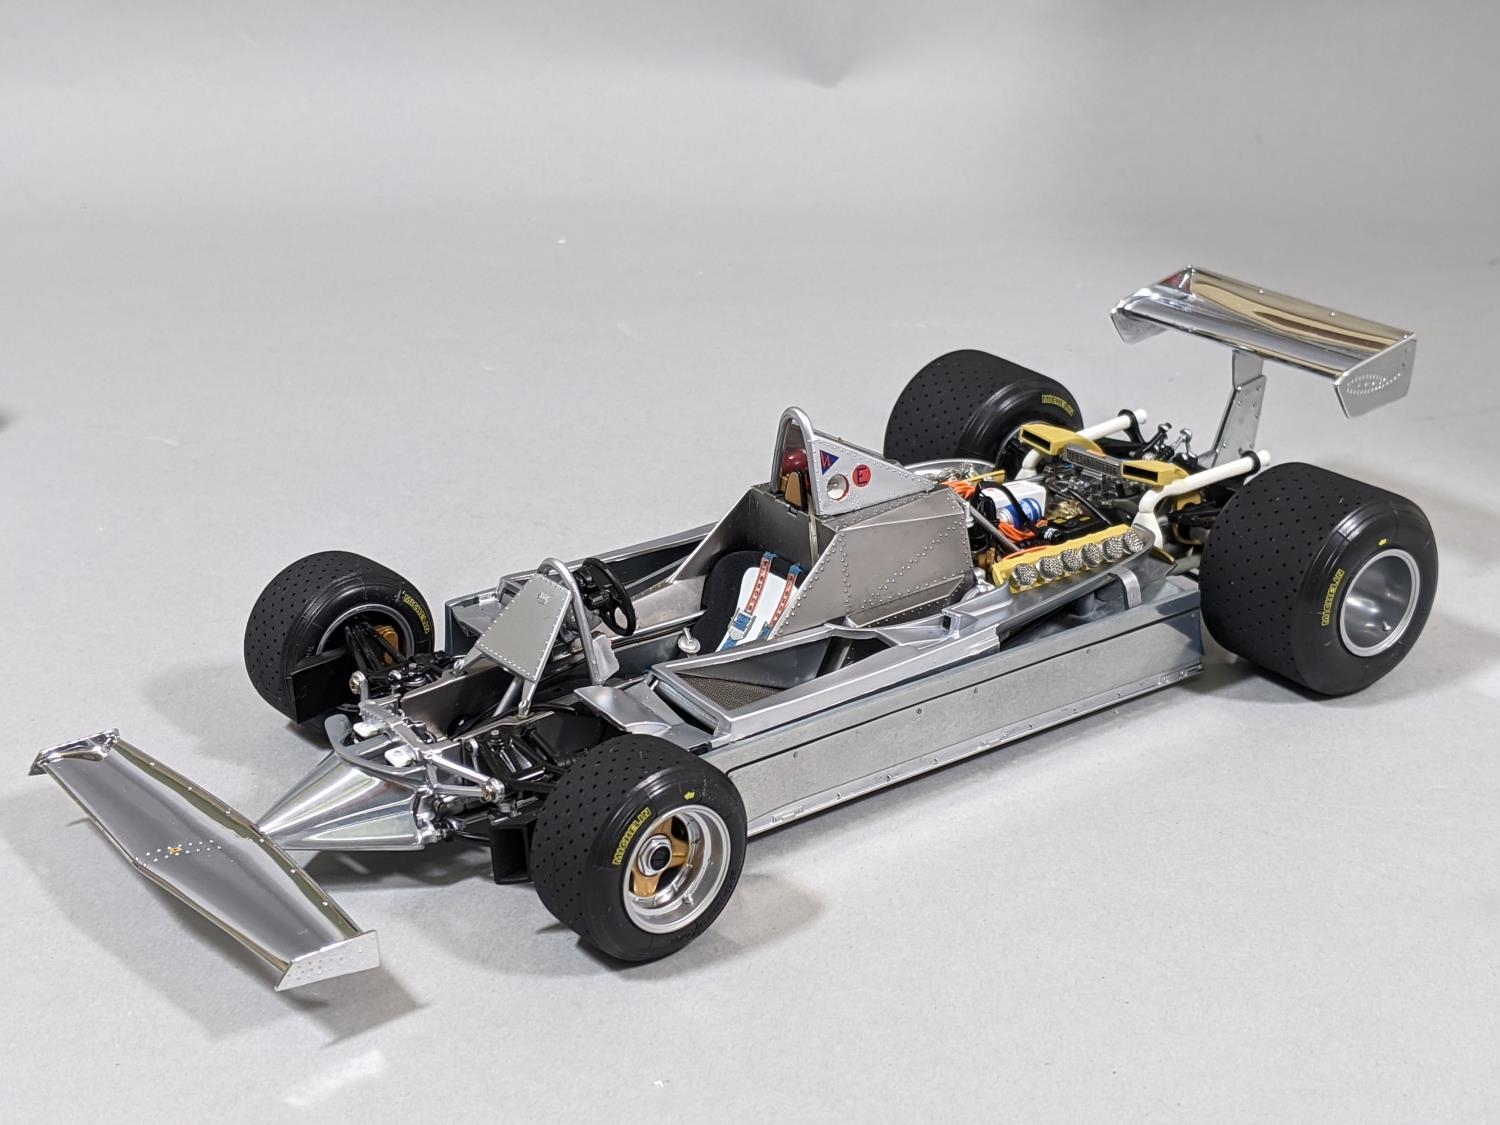 1:18 scale Ferrari 312 T4 Formula 1 racing car in polished aluminium chrome, no 97079 by Exoto - Image 2 of 6